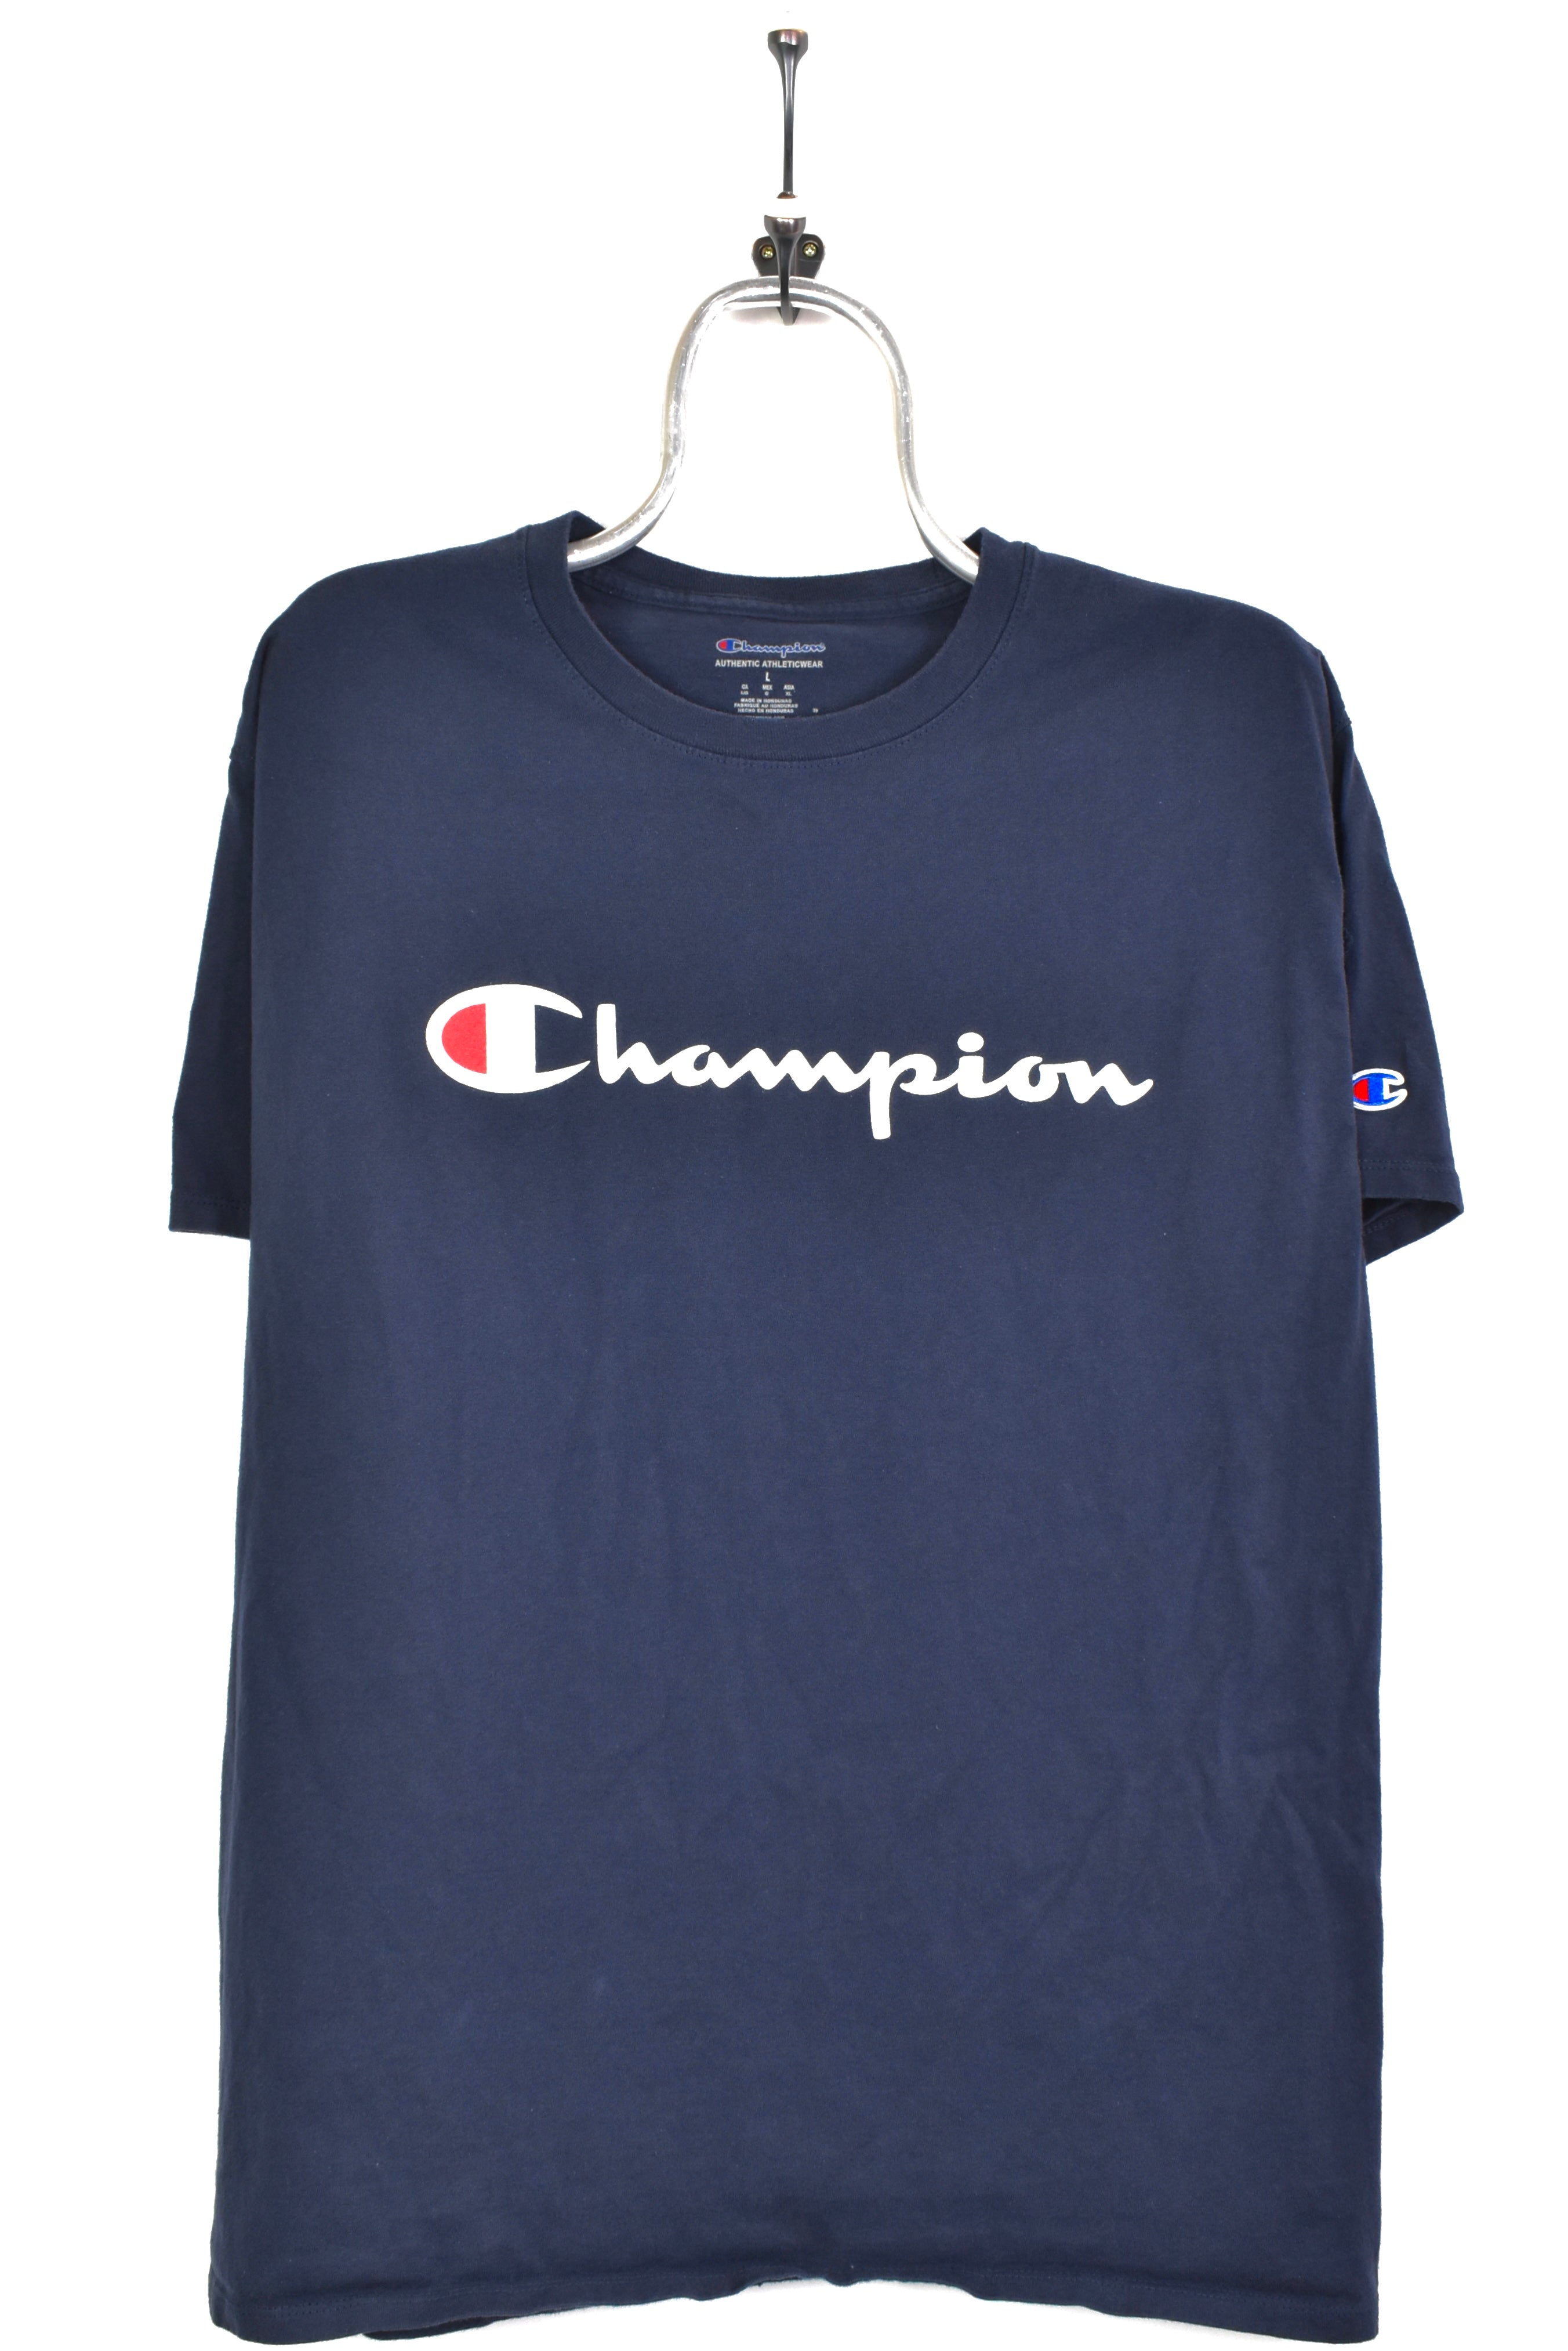 Modern Champion shirt, short sleeve graphic tee - medium, navy blue CHAMPION